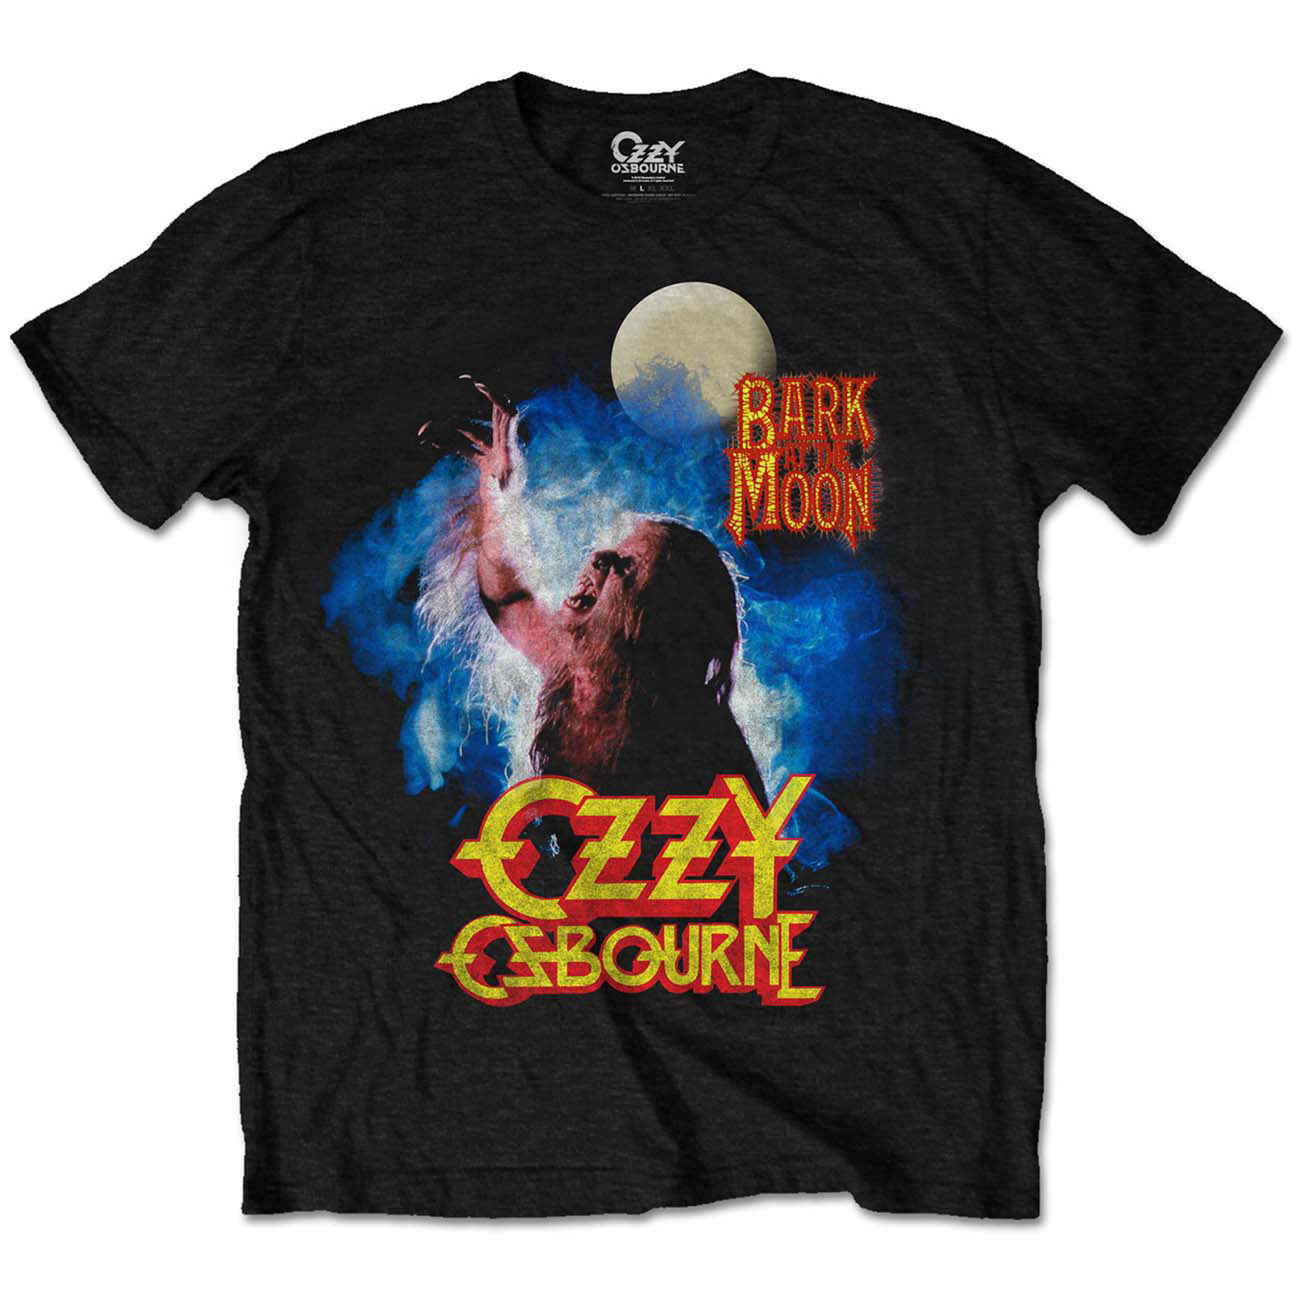 Ozzy Osbourne Unisex T-Shirt: Bark at the moon